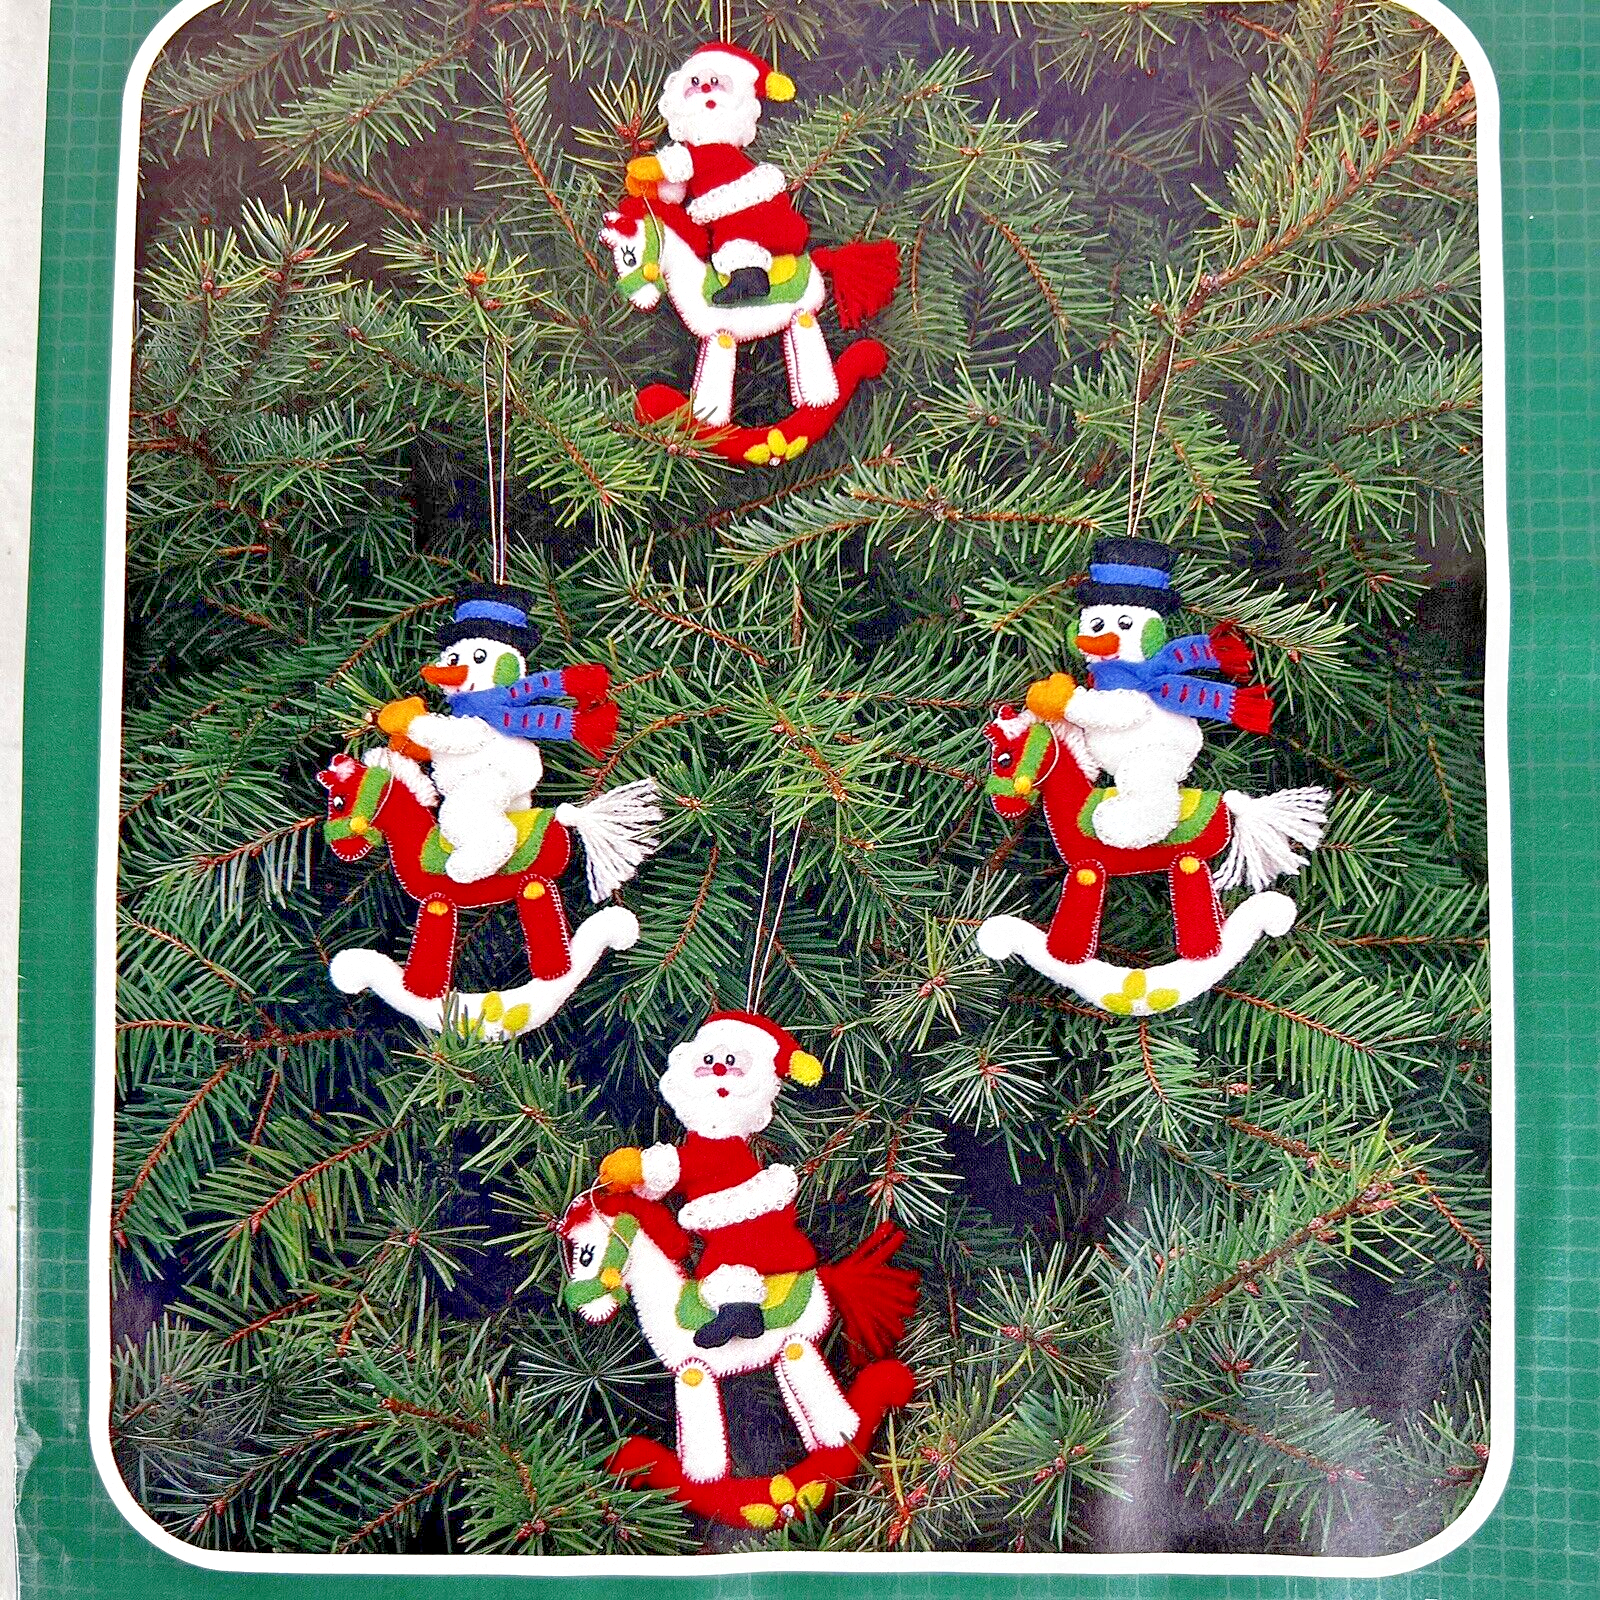 Felt Ornaments Applique Kit - Winter Wonderland